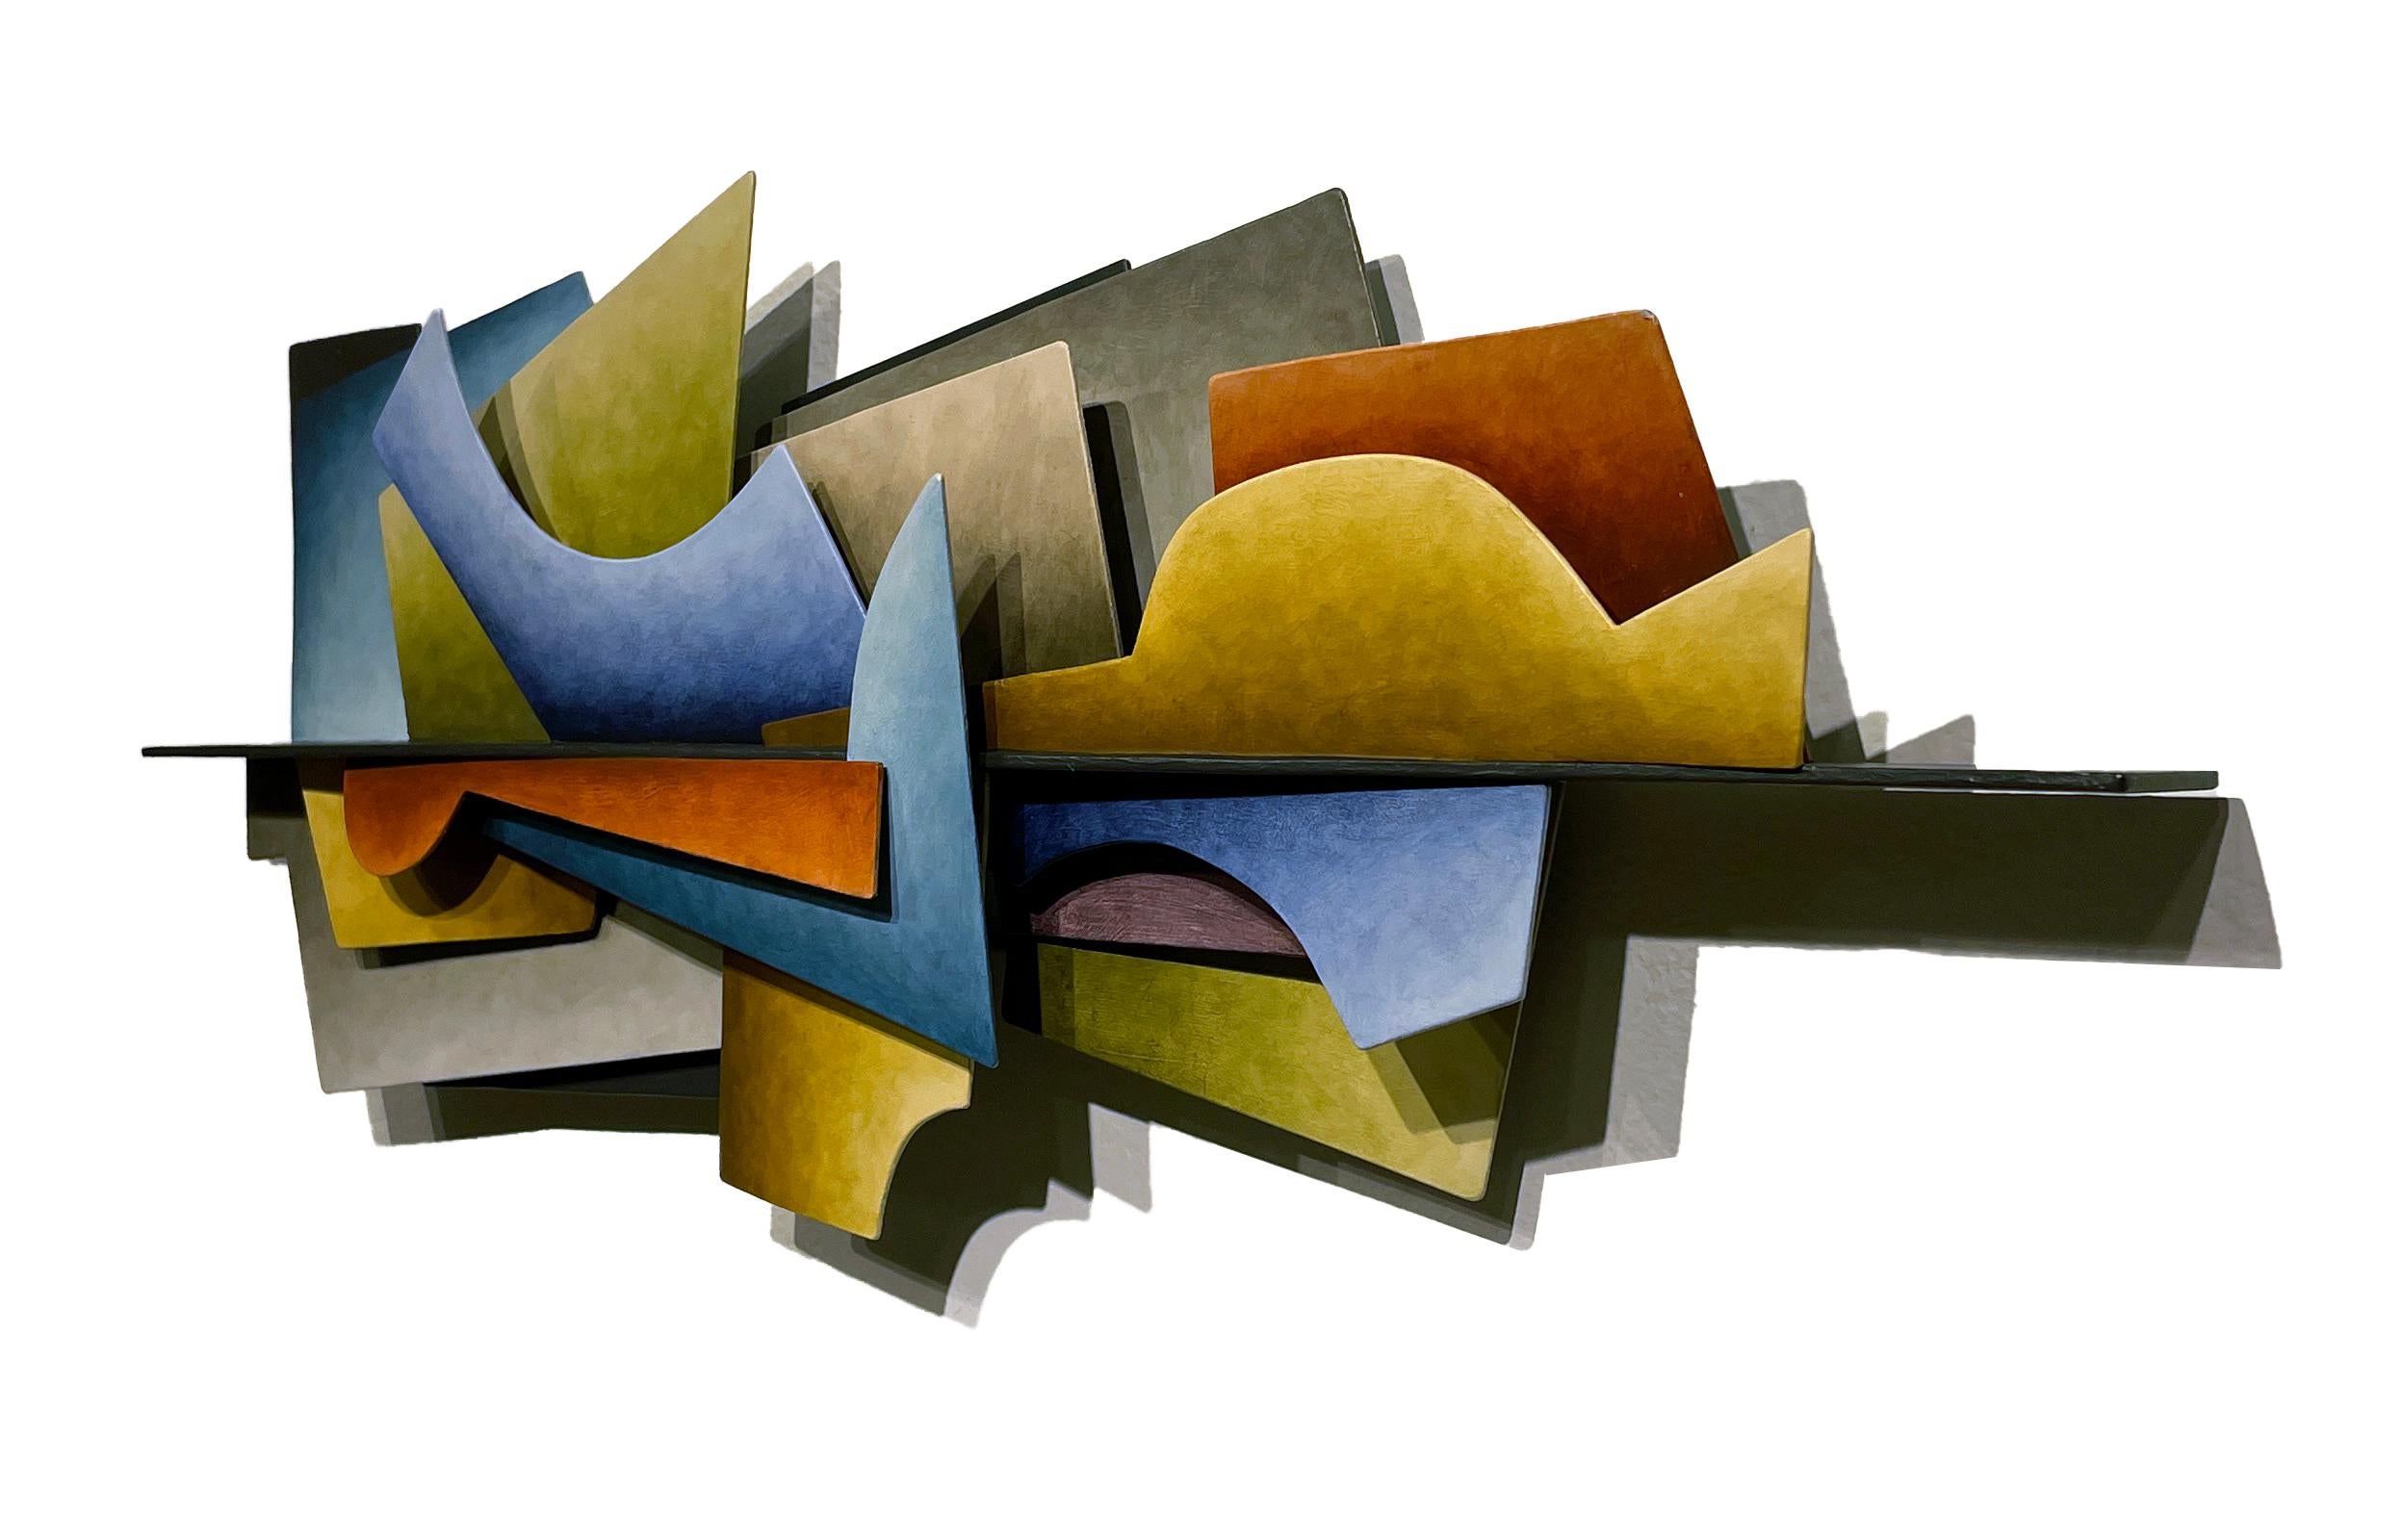 Gewebter Pflanzgefäß – abstrakte geometrische Form, handbemalte Wandskulptur aus geschweißtem Stahlblech  (Geometrische Abstraktion), Mixed Media Art, von Chris Hill